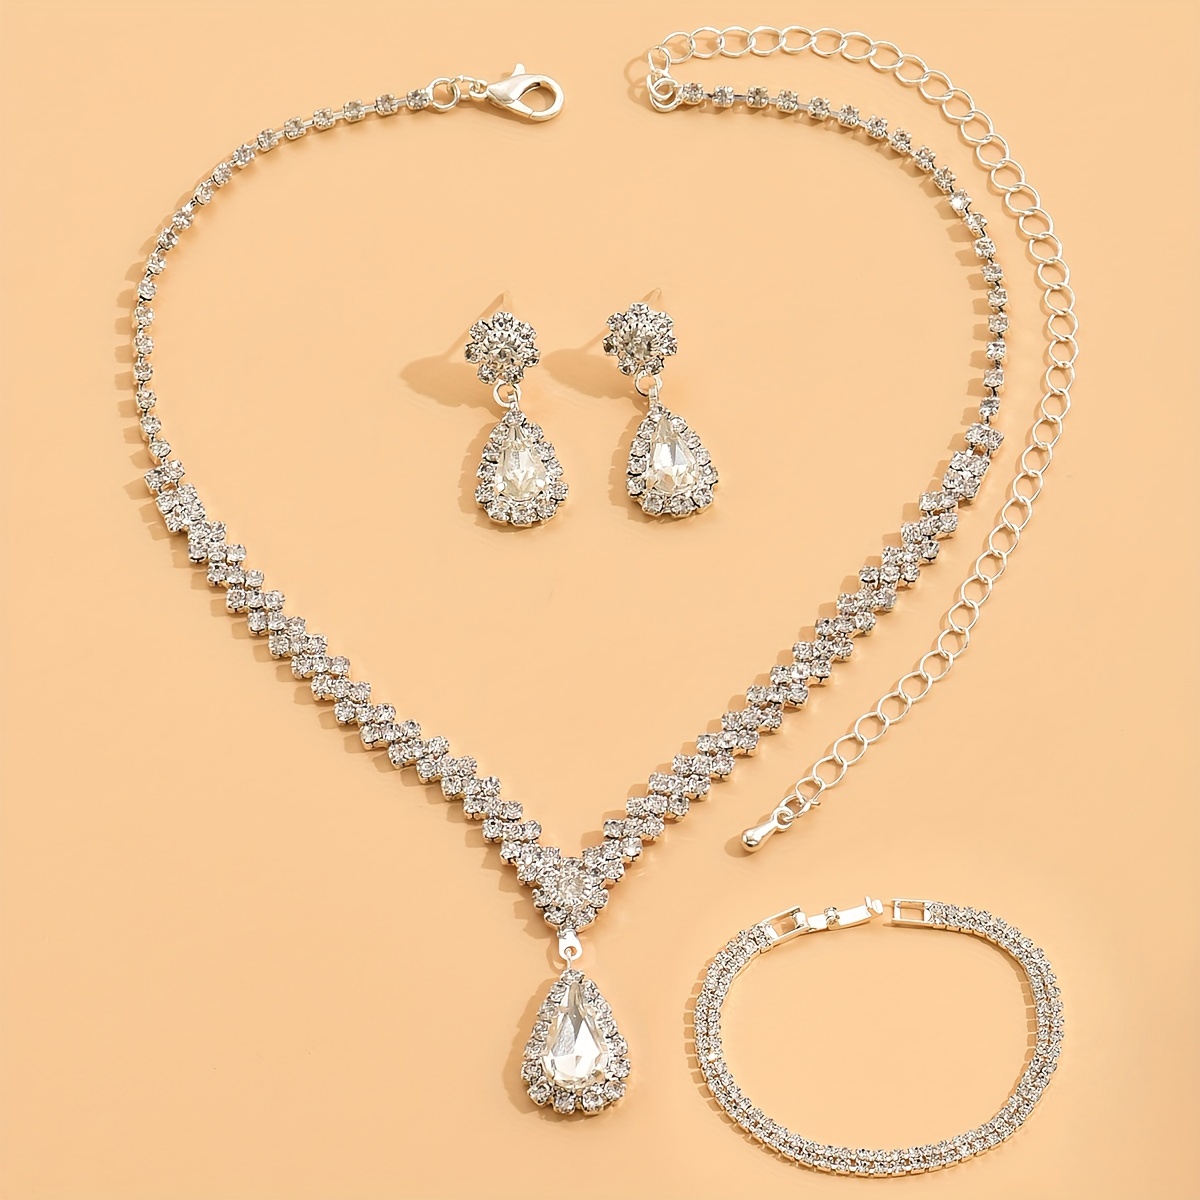 1 lb Large BULK Lot Costume Jewelry Charms Pendants Rhinestone Earrings  Necklace